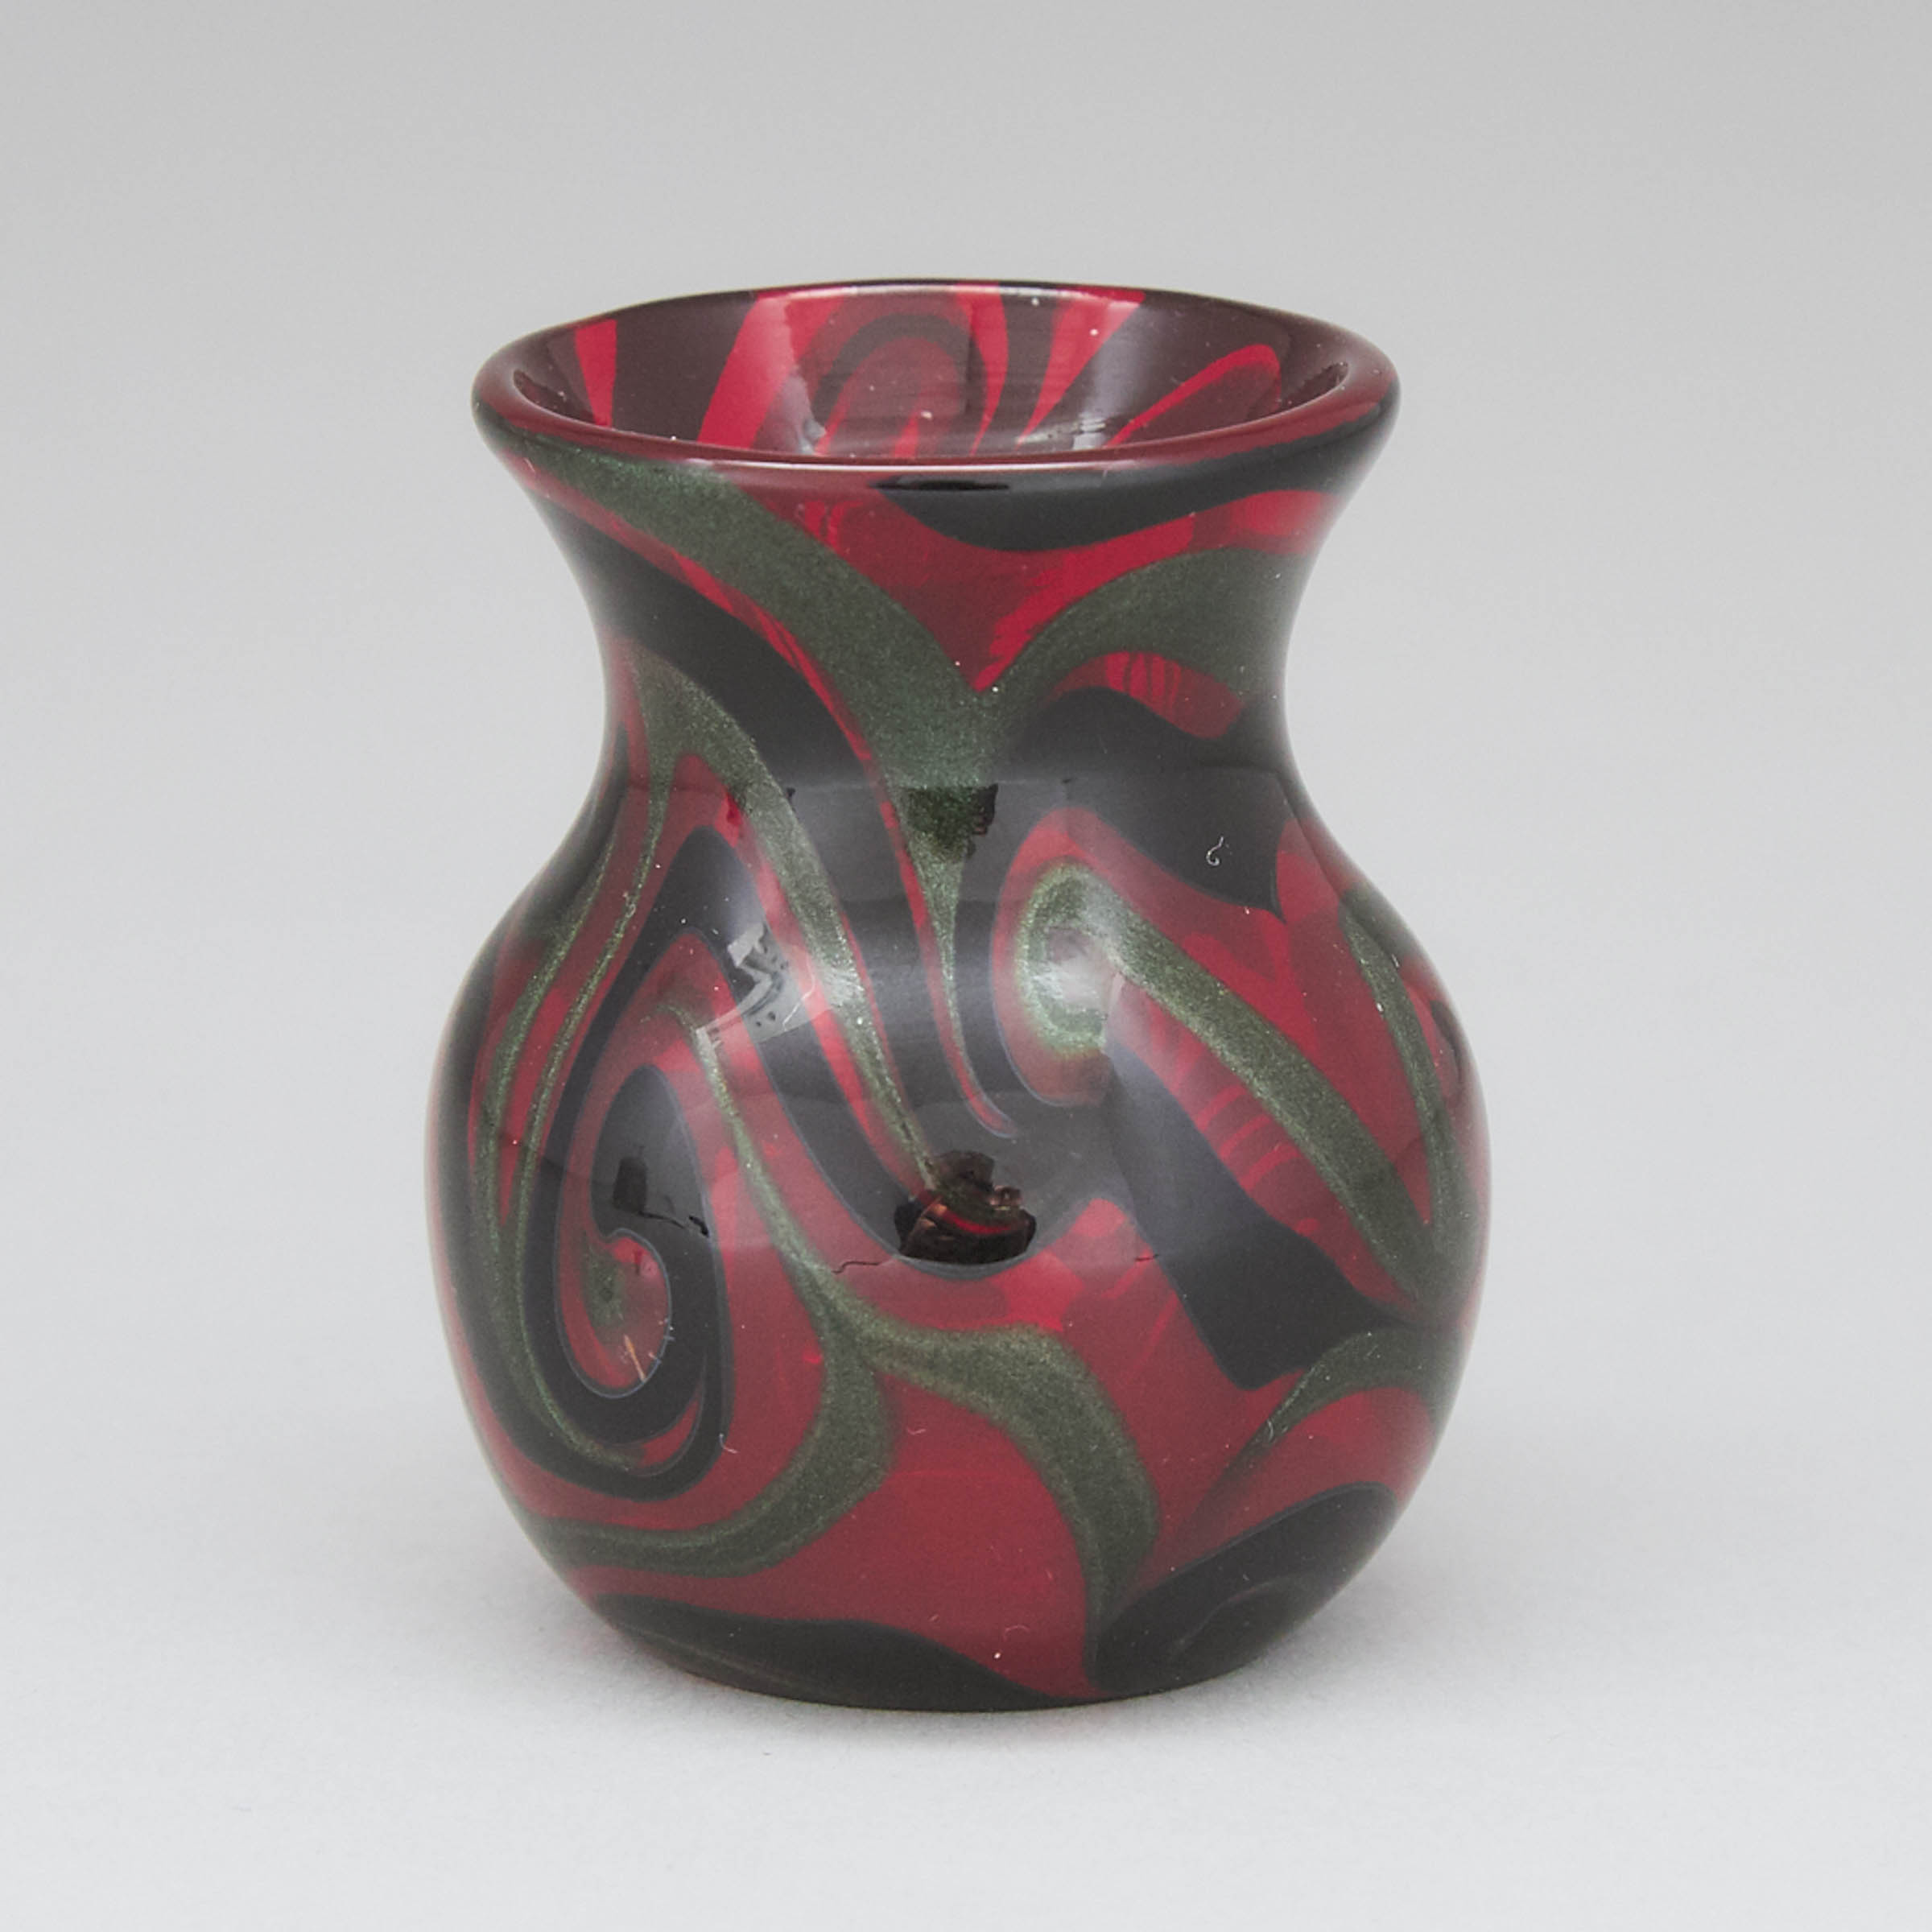 Charles Lotton (American, b.1935), Miniature Red Glass Vase, 2010